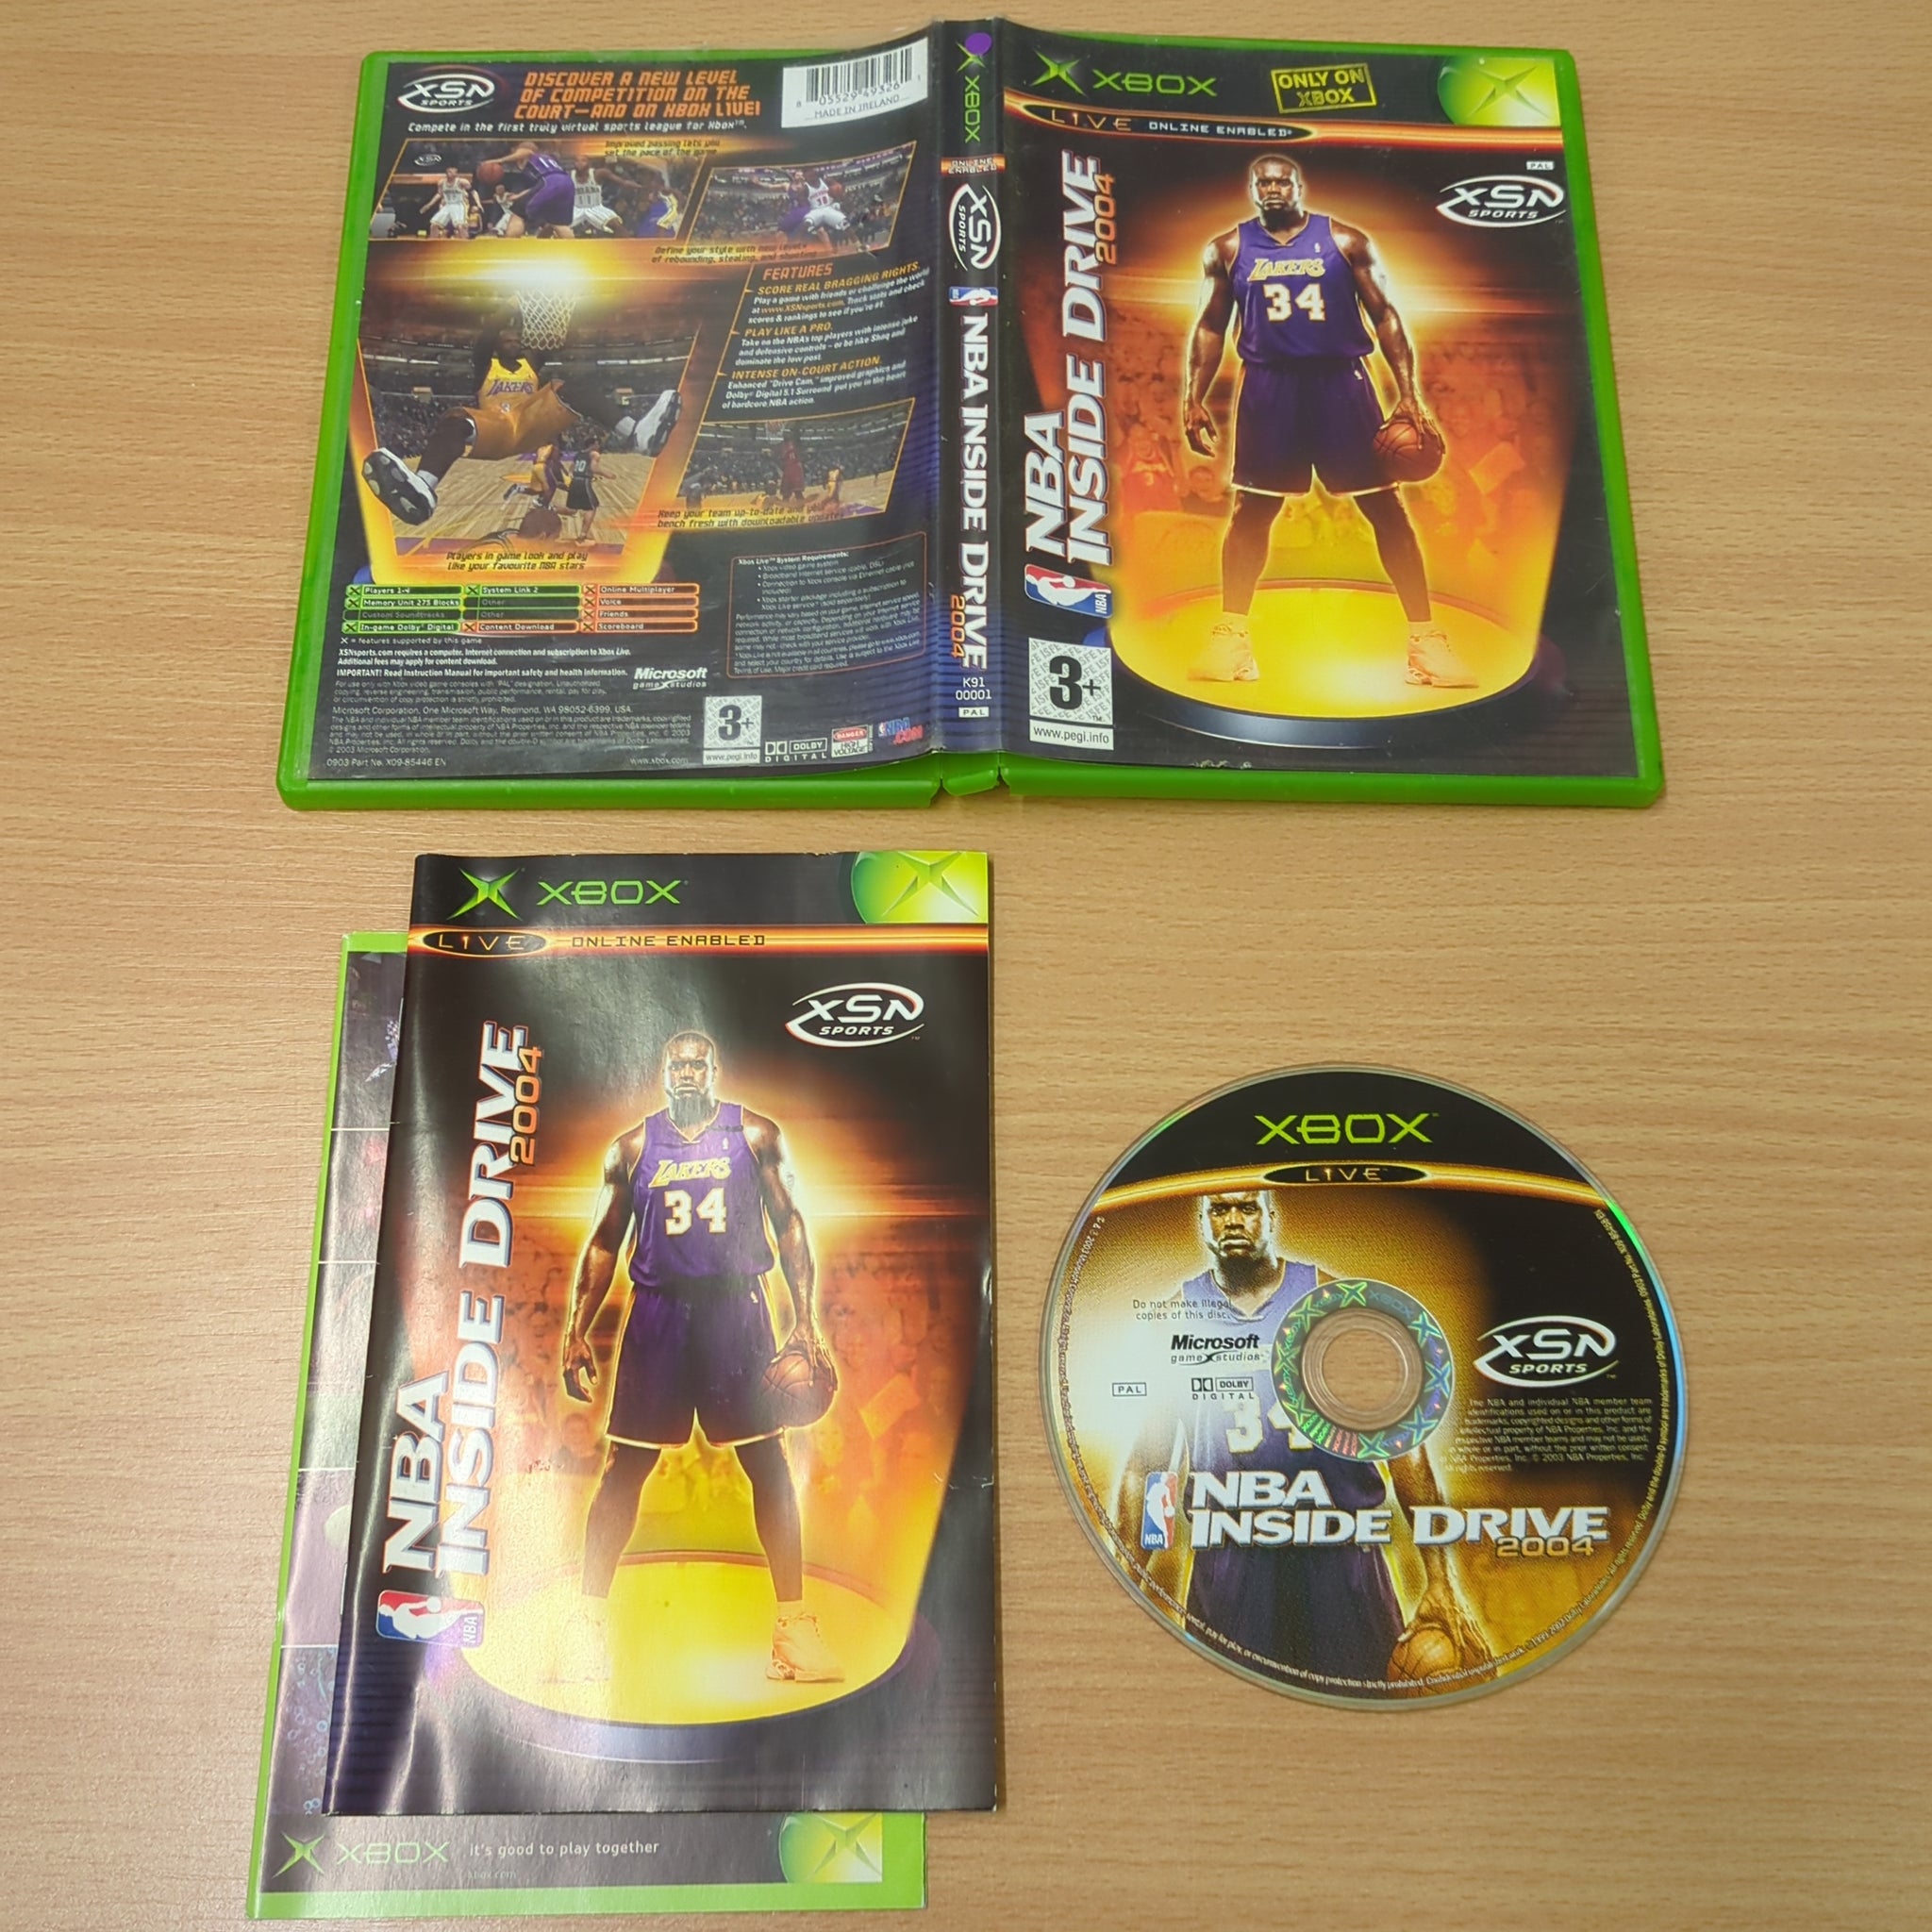 NBA Inside Drive 2004 original Xbox game